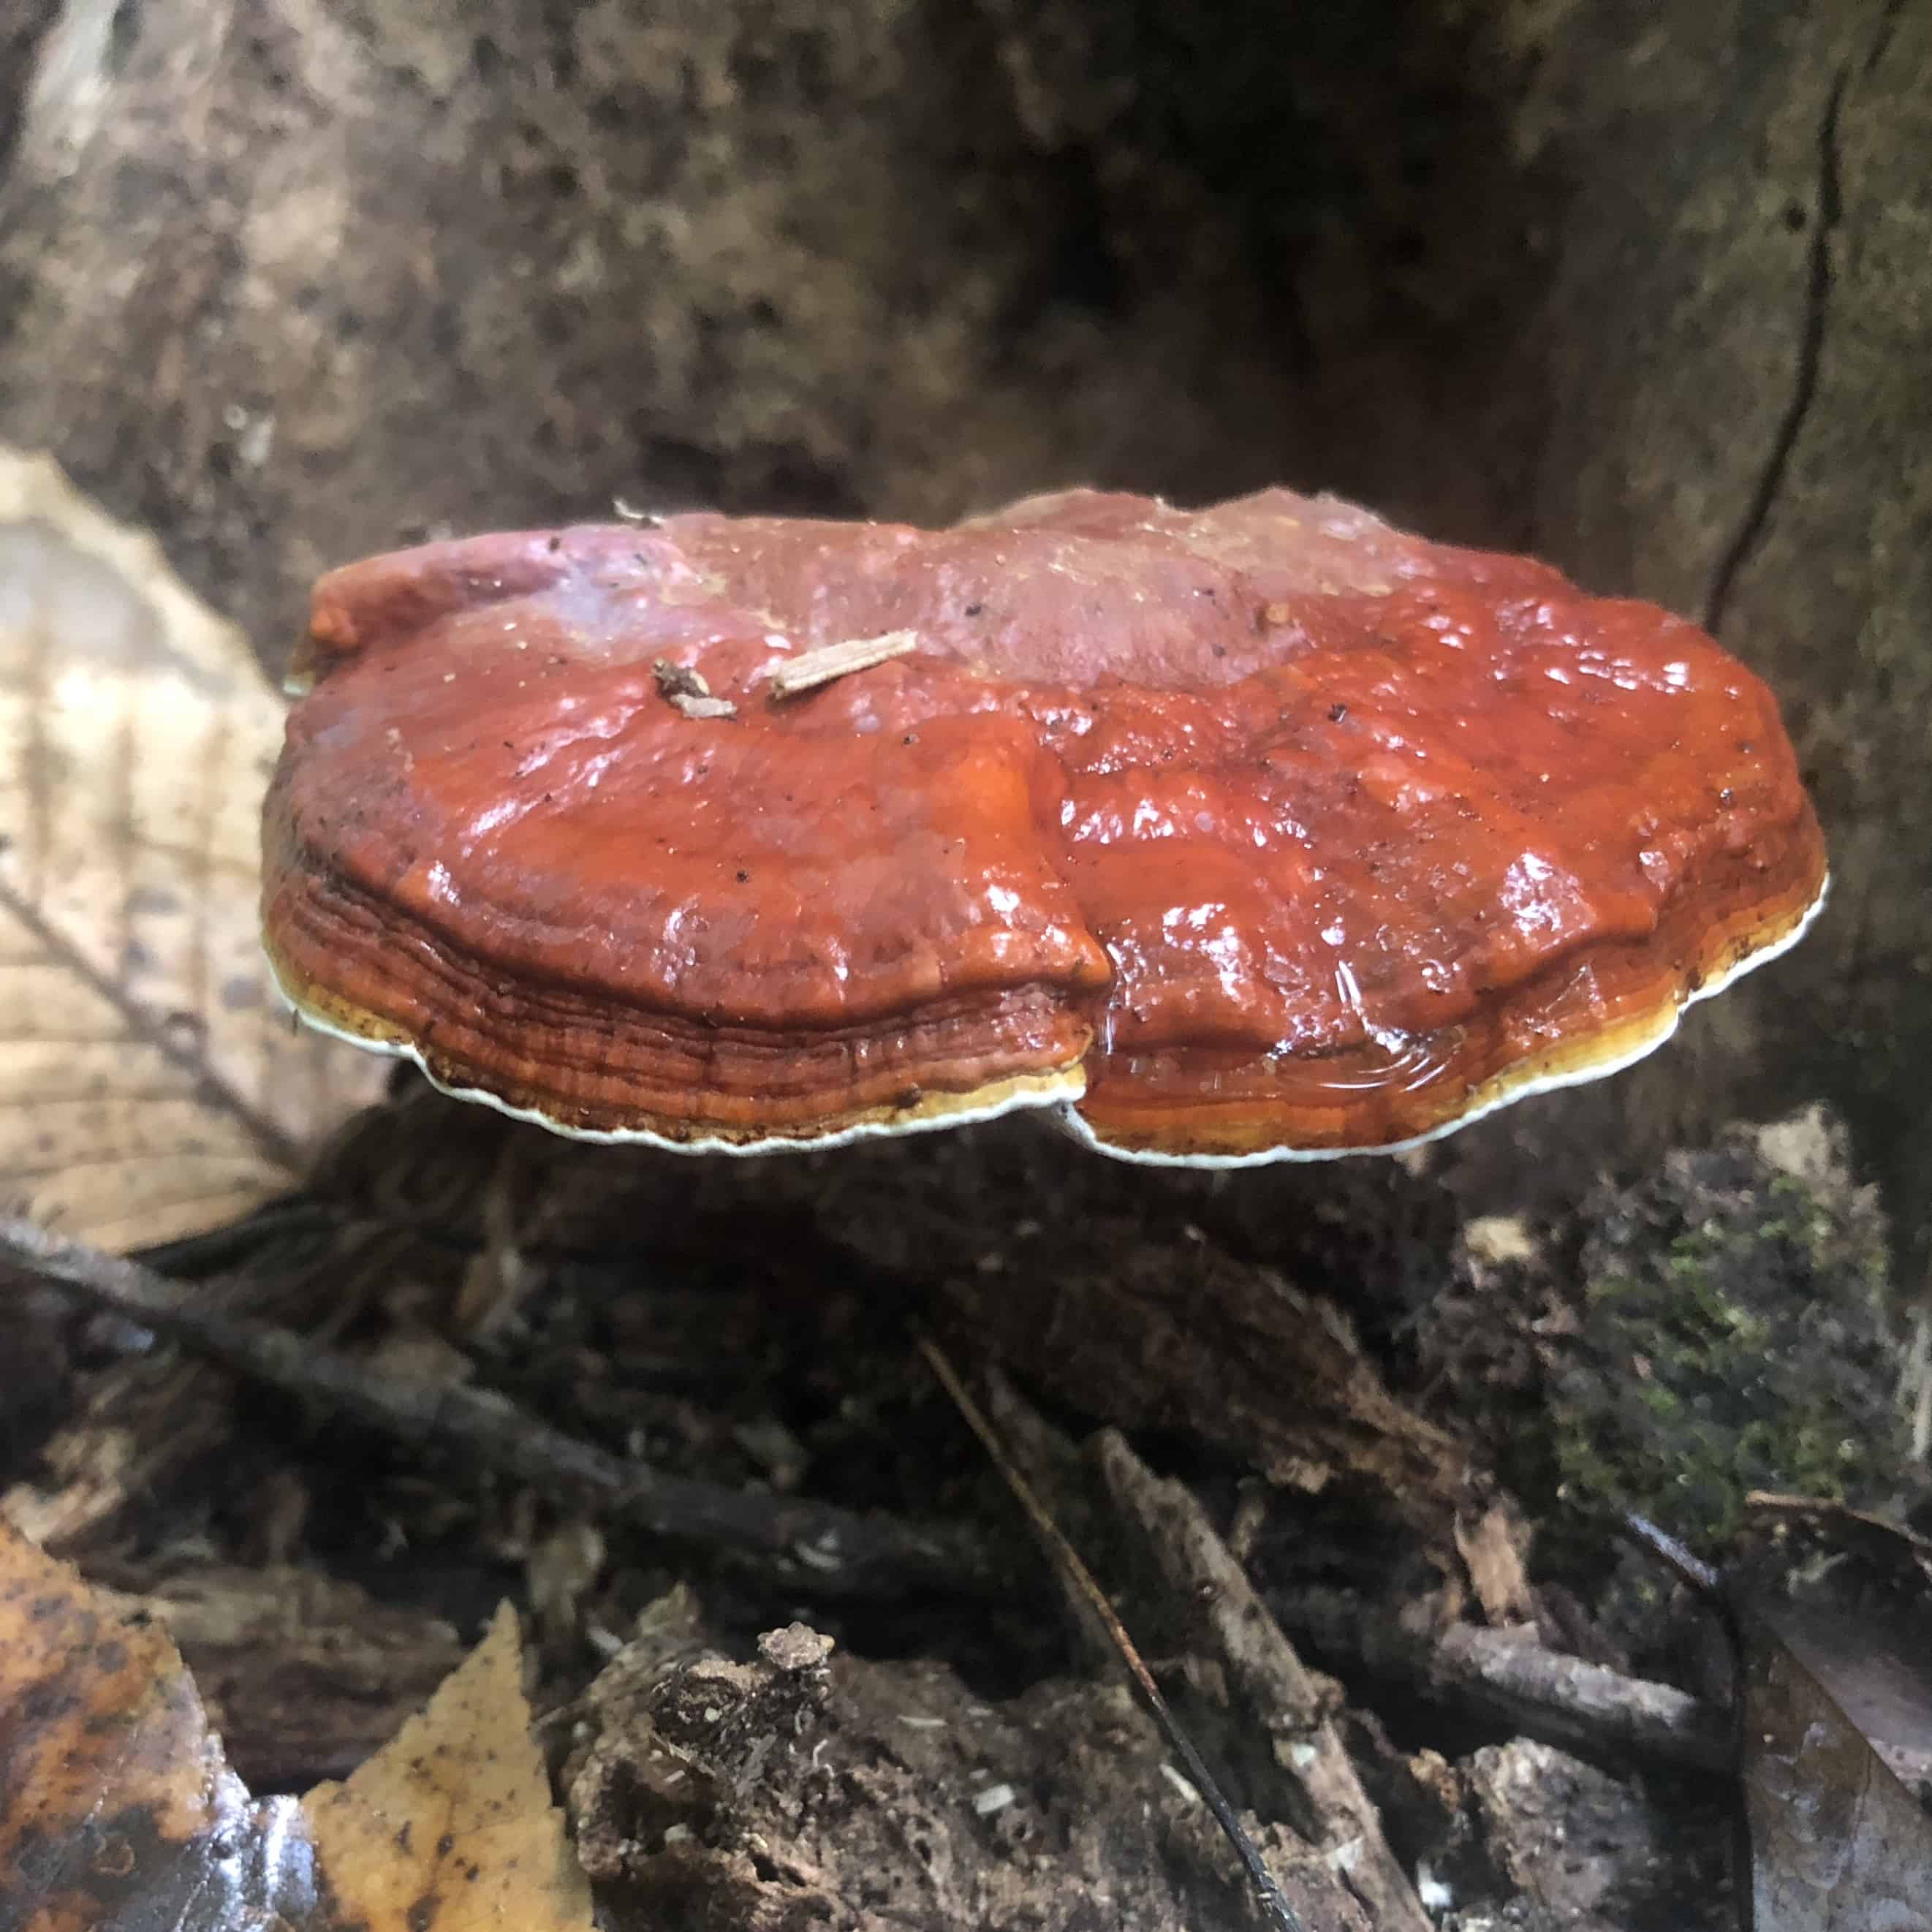 Larger burnt orange fungi